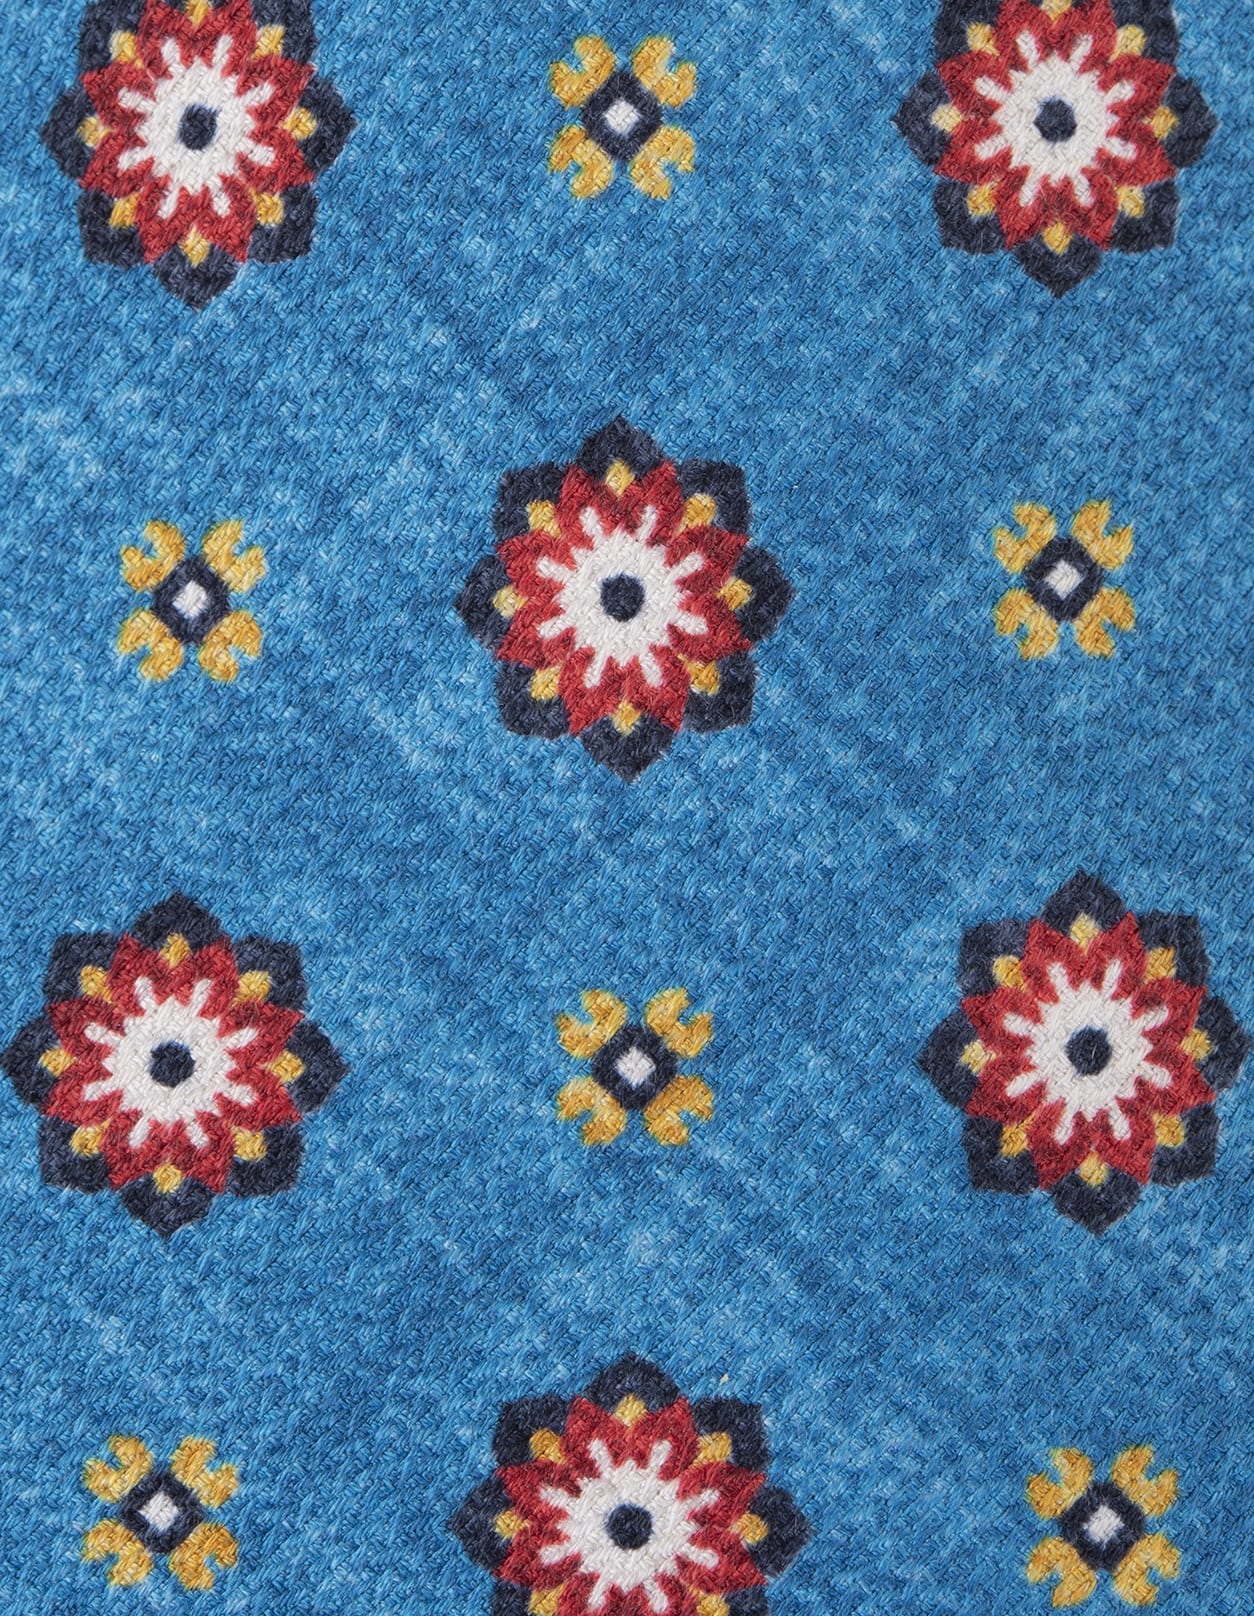 Shop Kiton Light Blue Tie With Flower Pattern